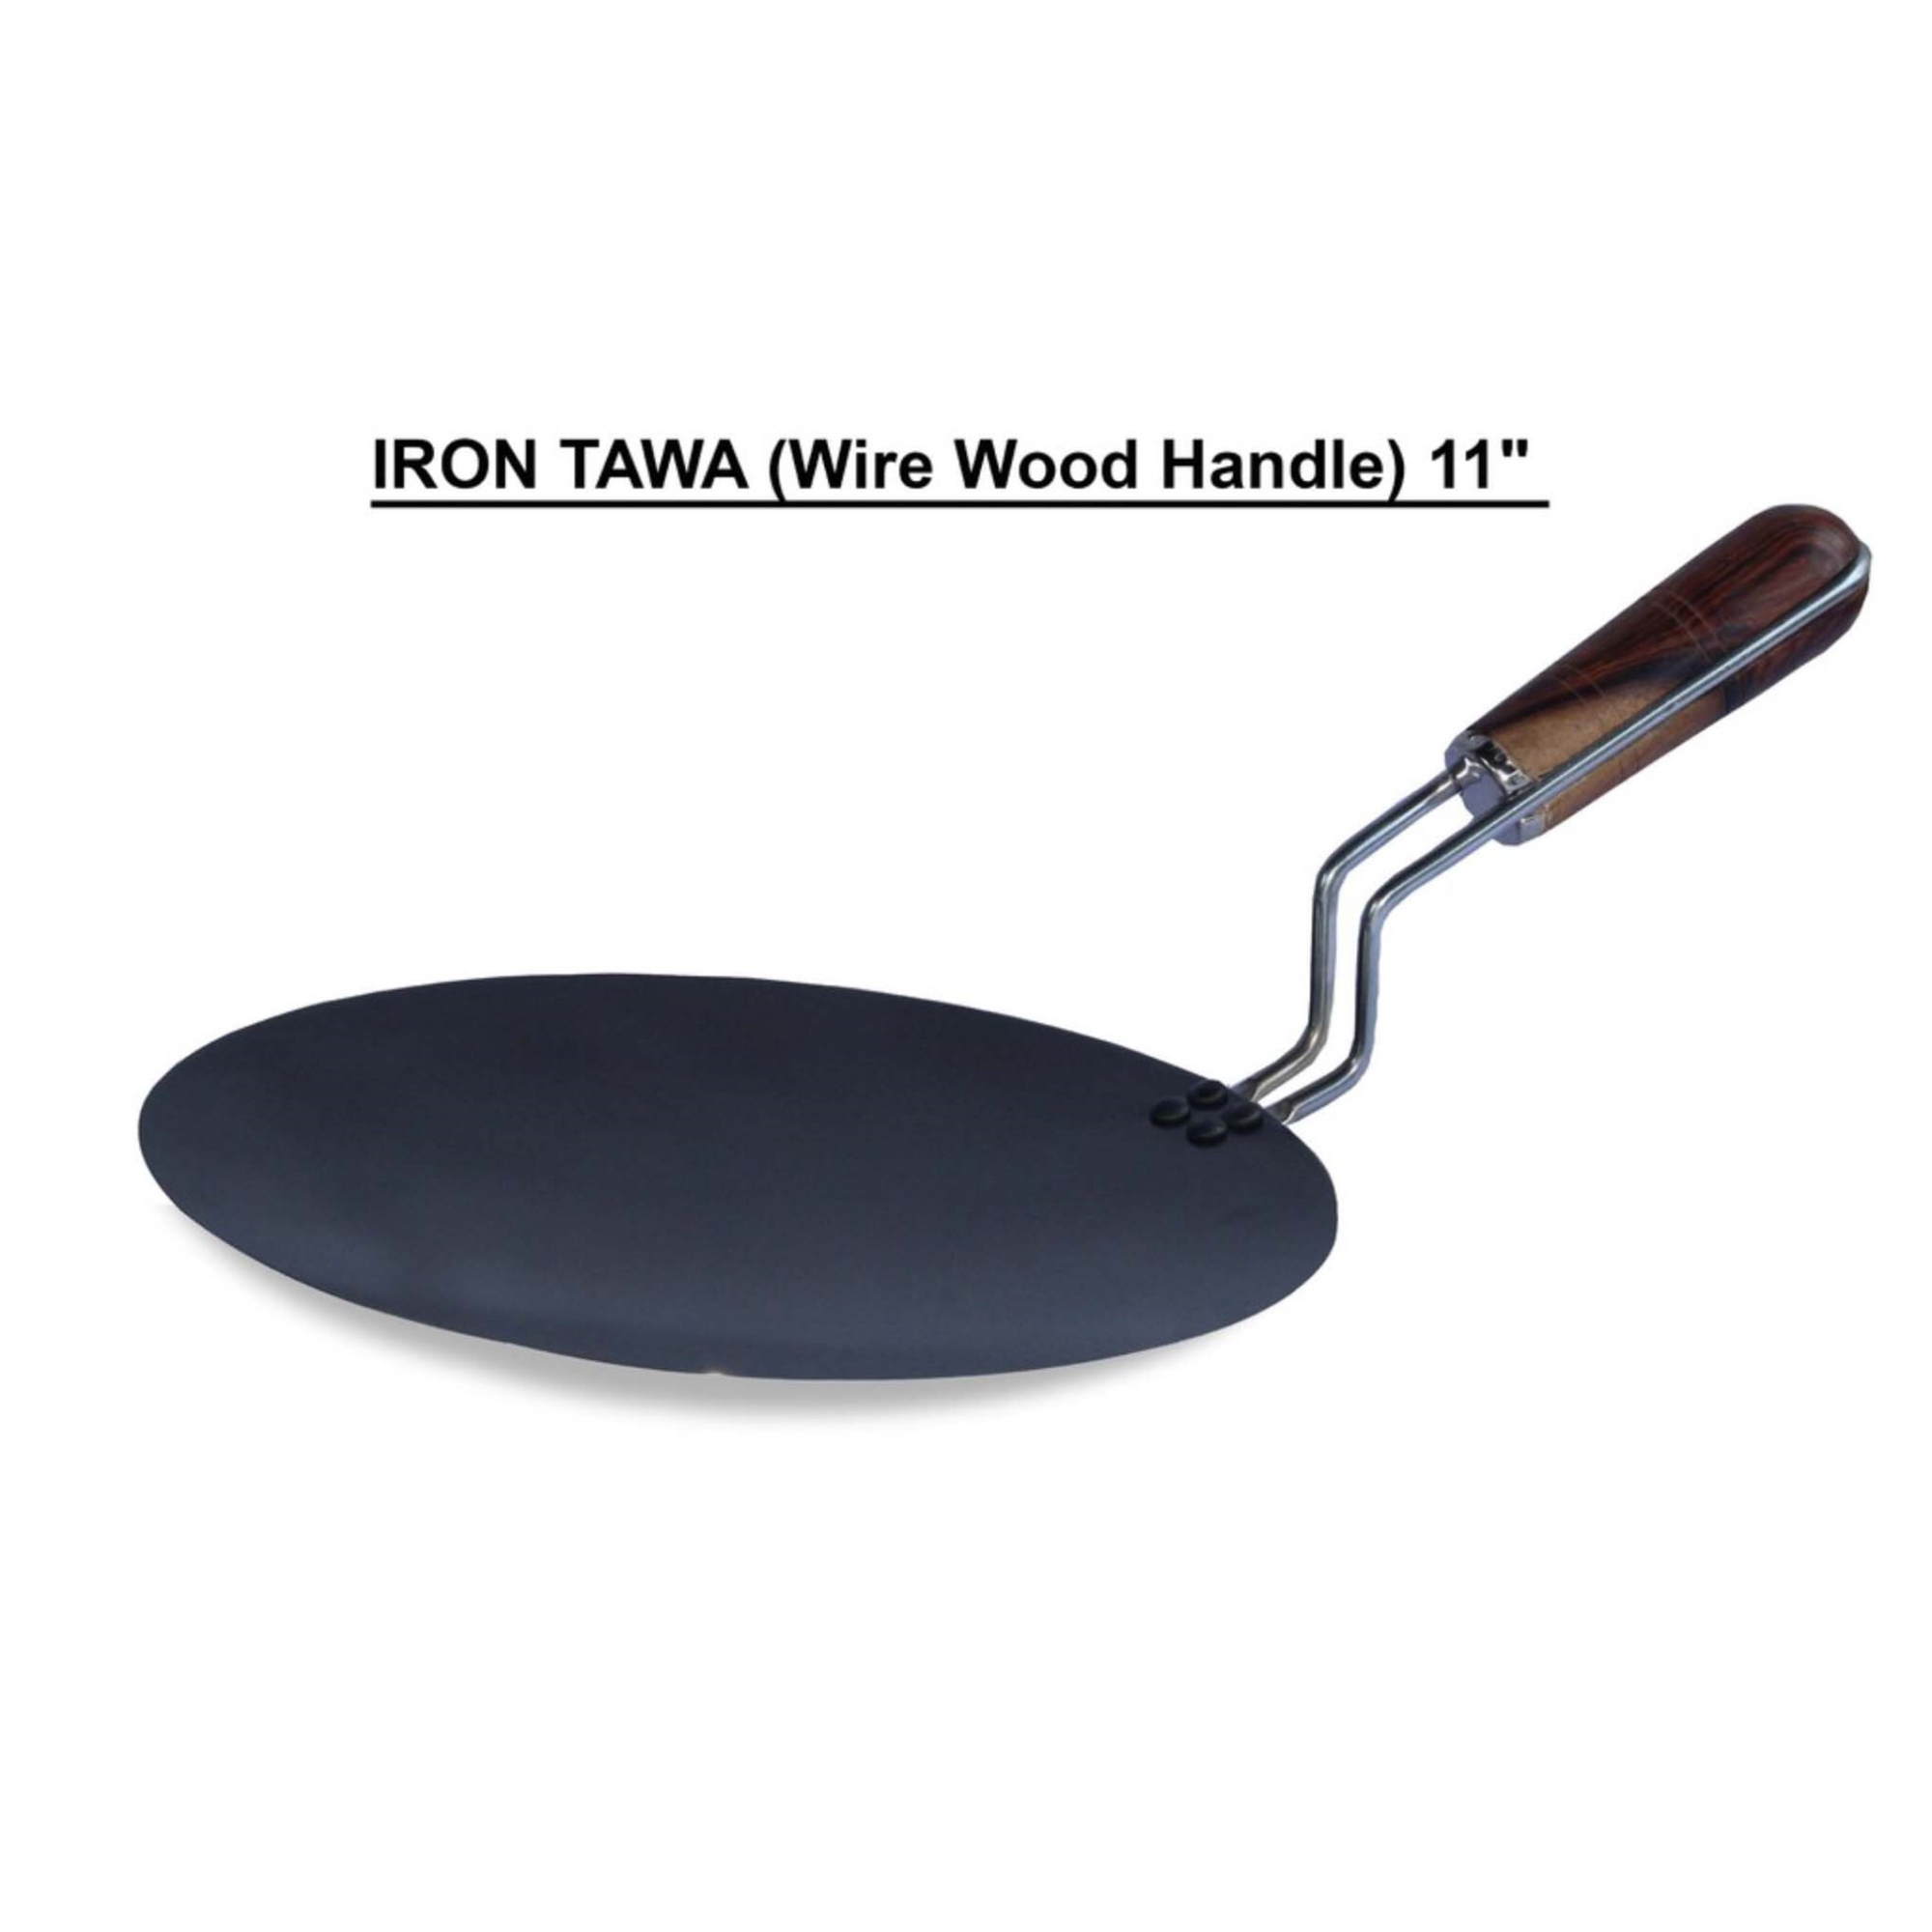 Iron Tawa Wire Wood Handle - 11 Inches